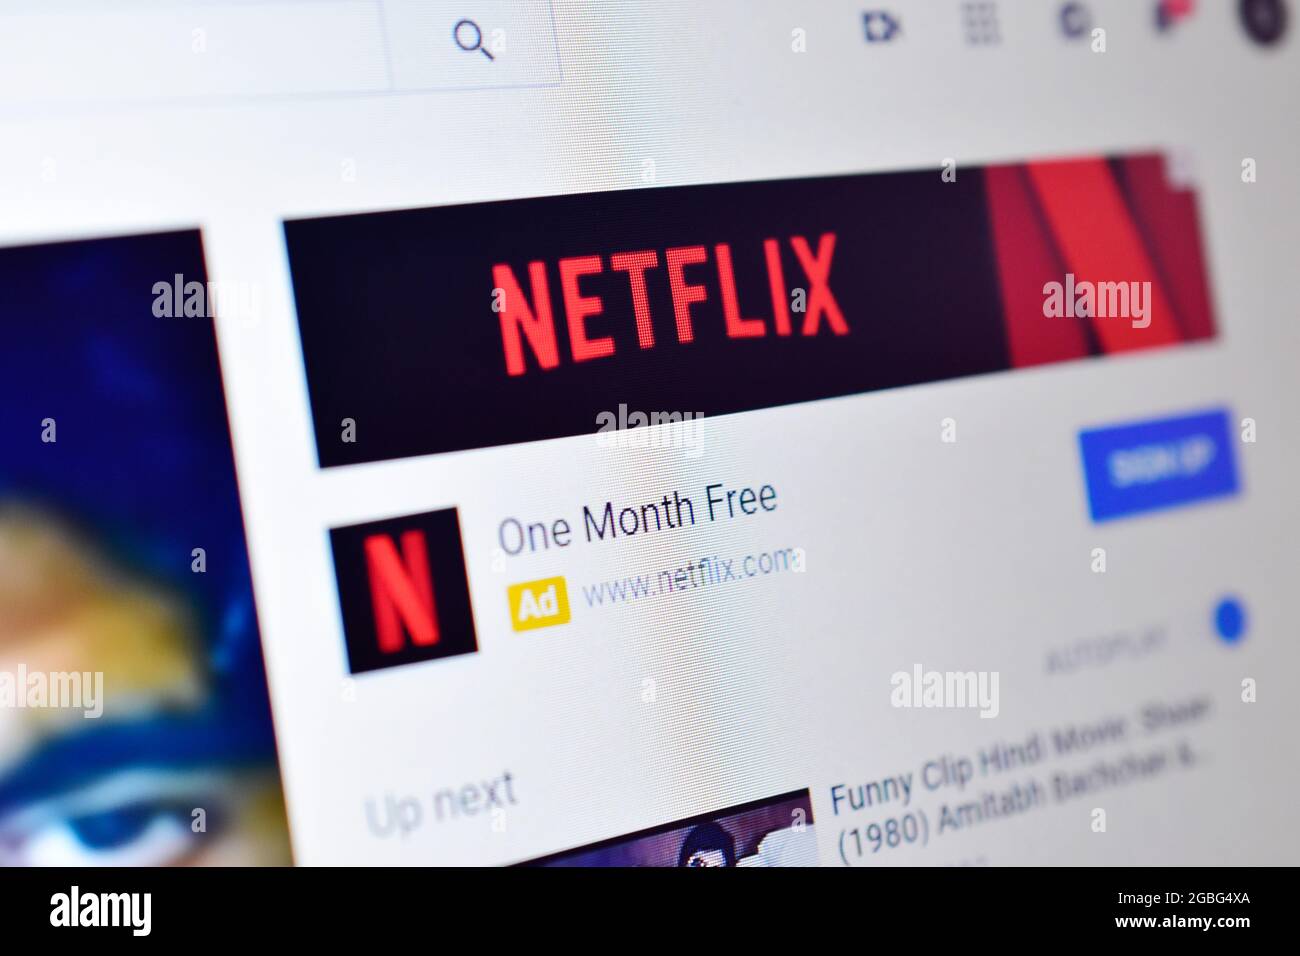 DELHI, INDIA - 9 de diciembre de 2018: Primer plano del logotipo de Netflix en el portátil que se muestra gratis durante un mes Foto de stock